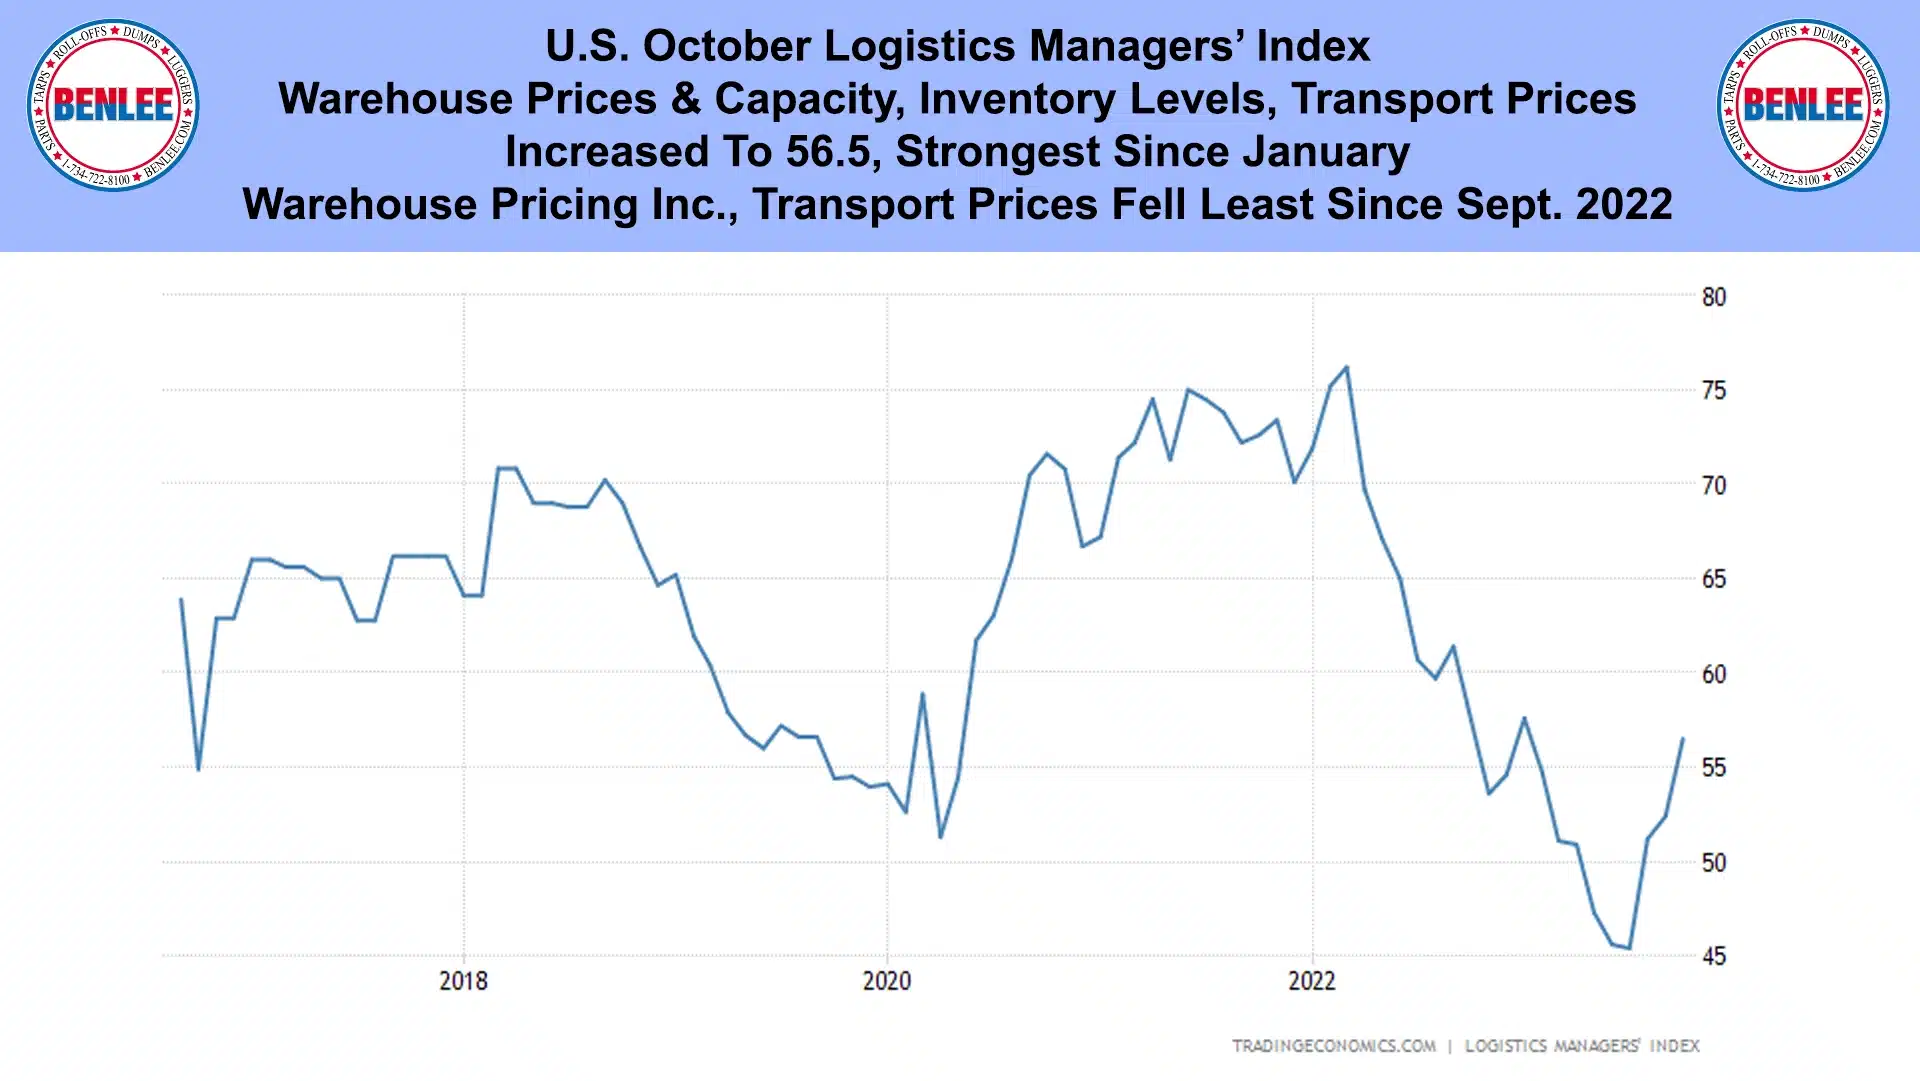 U.S. October Logistics Managers' Index